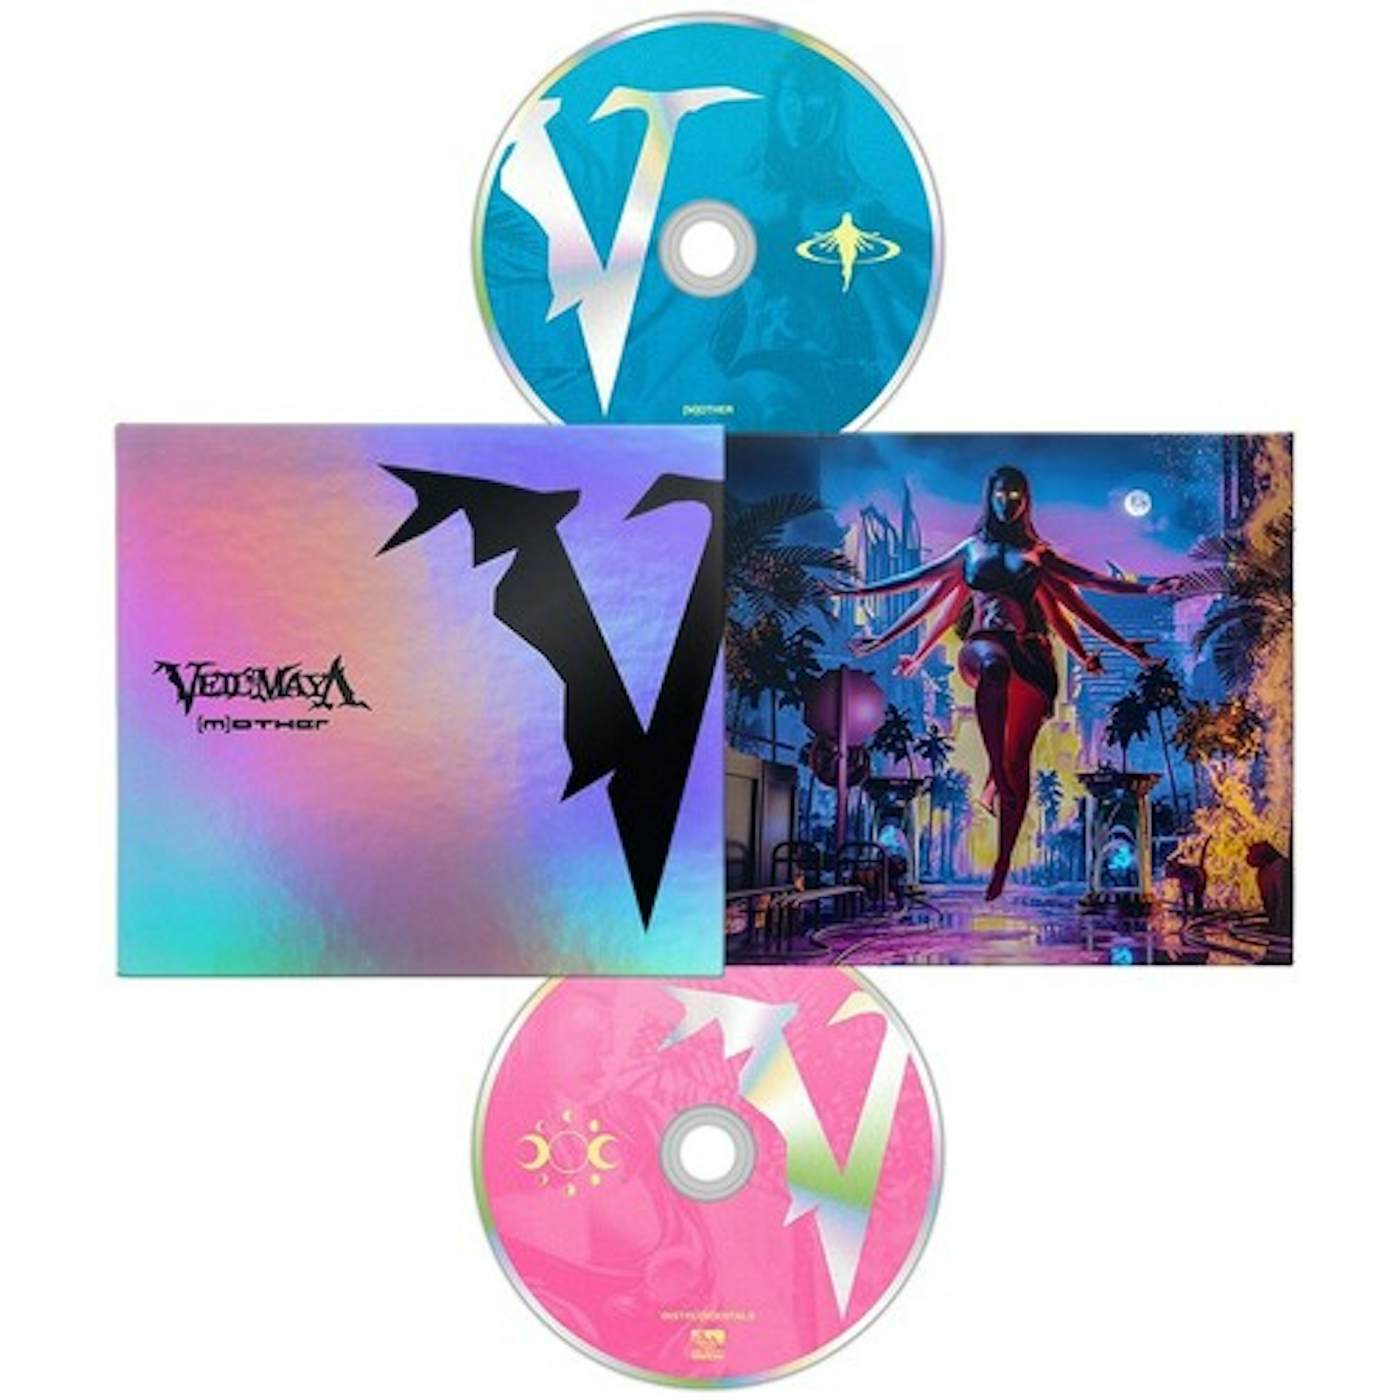 Beyond The Veil Standard Vinyl Box + Digital Download – Seven